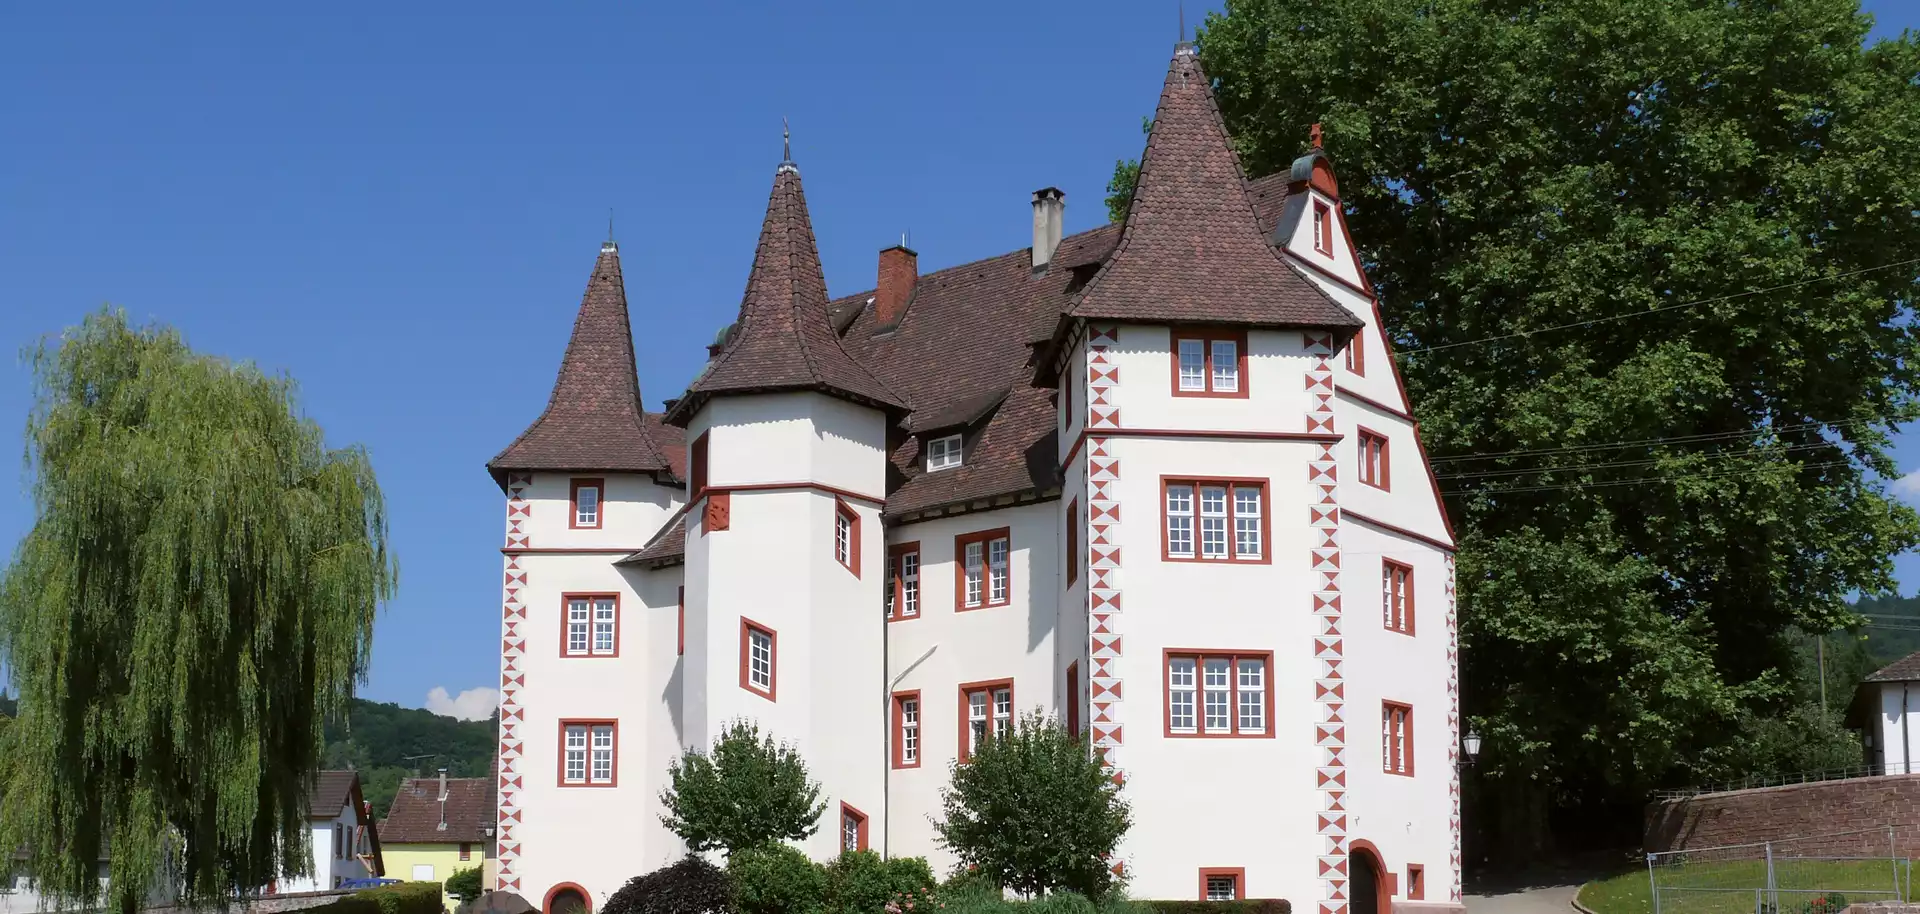 csm_Kippenheim-Schmieheim_castle_renovation_render_9e7c22cbc0-min.webp